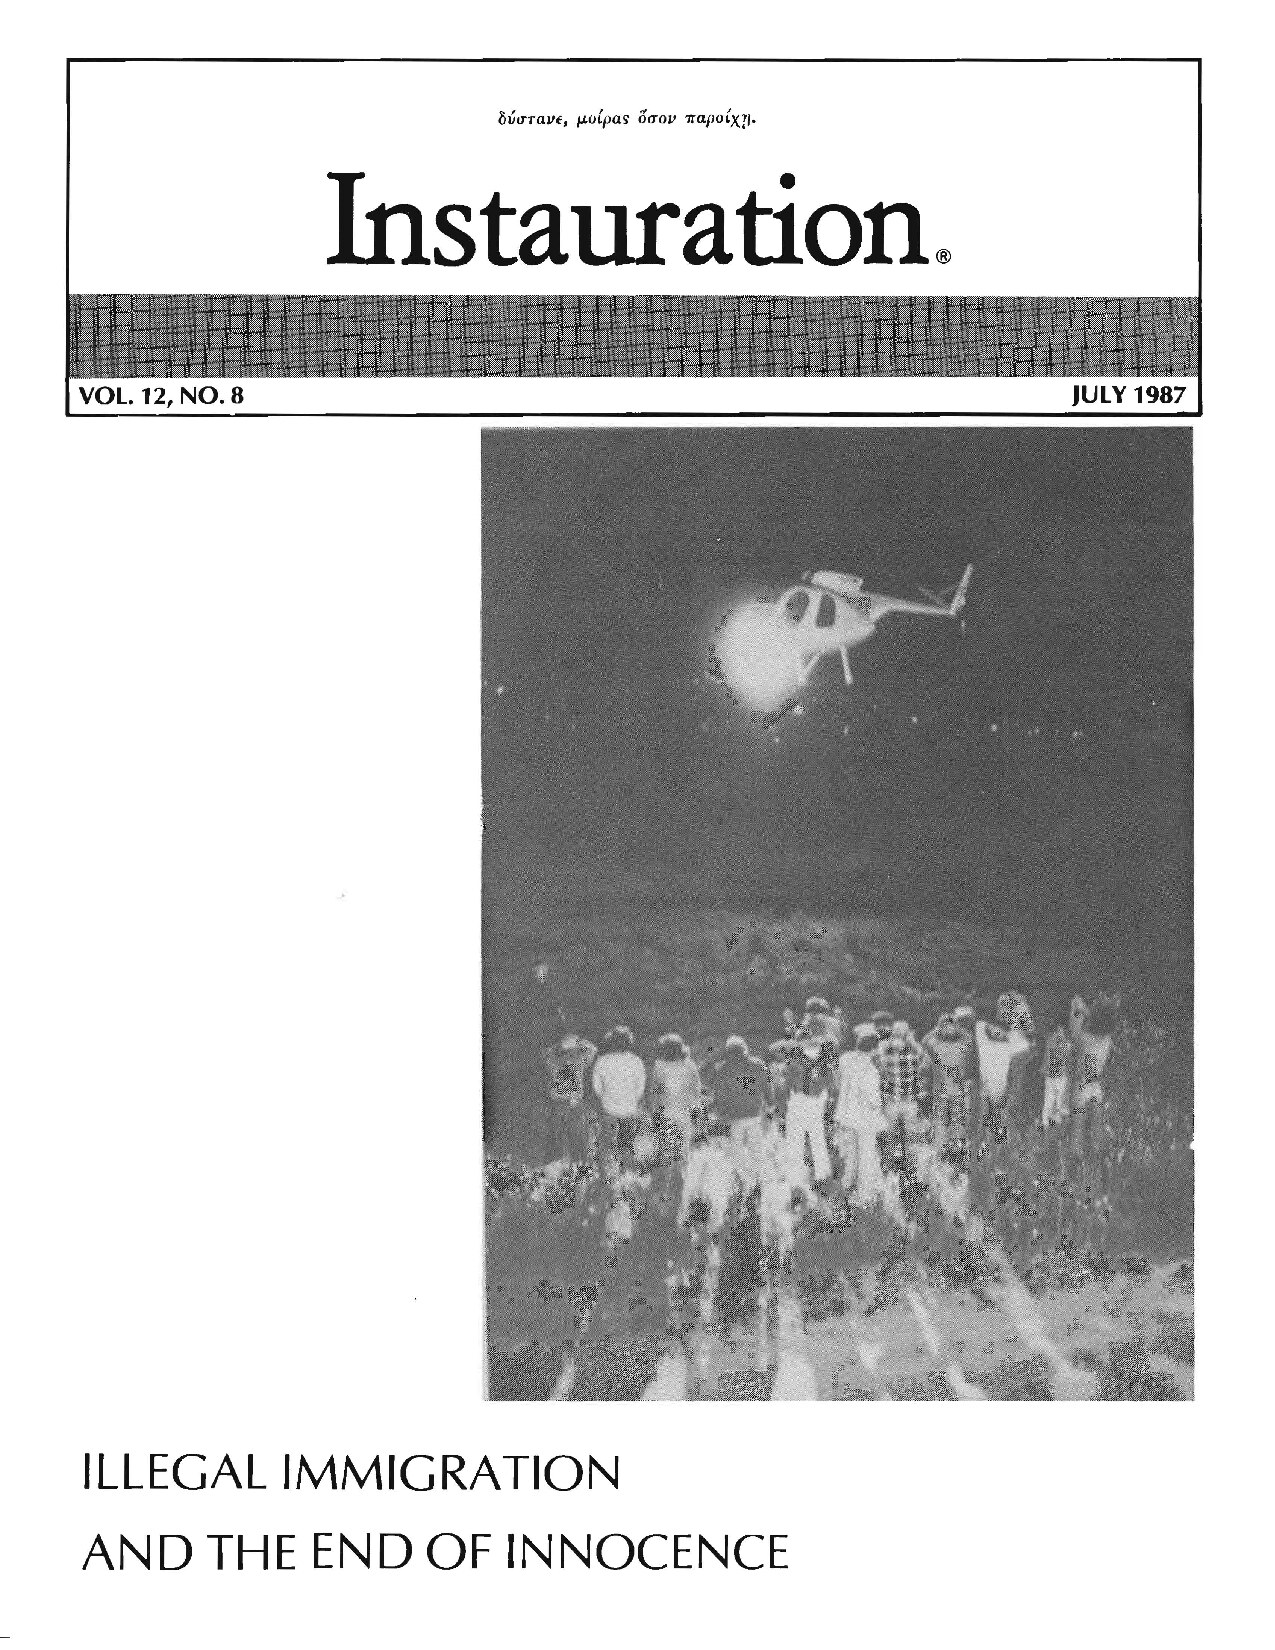 Instauration-1987-07-July-Vol12-No8